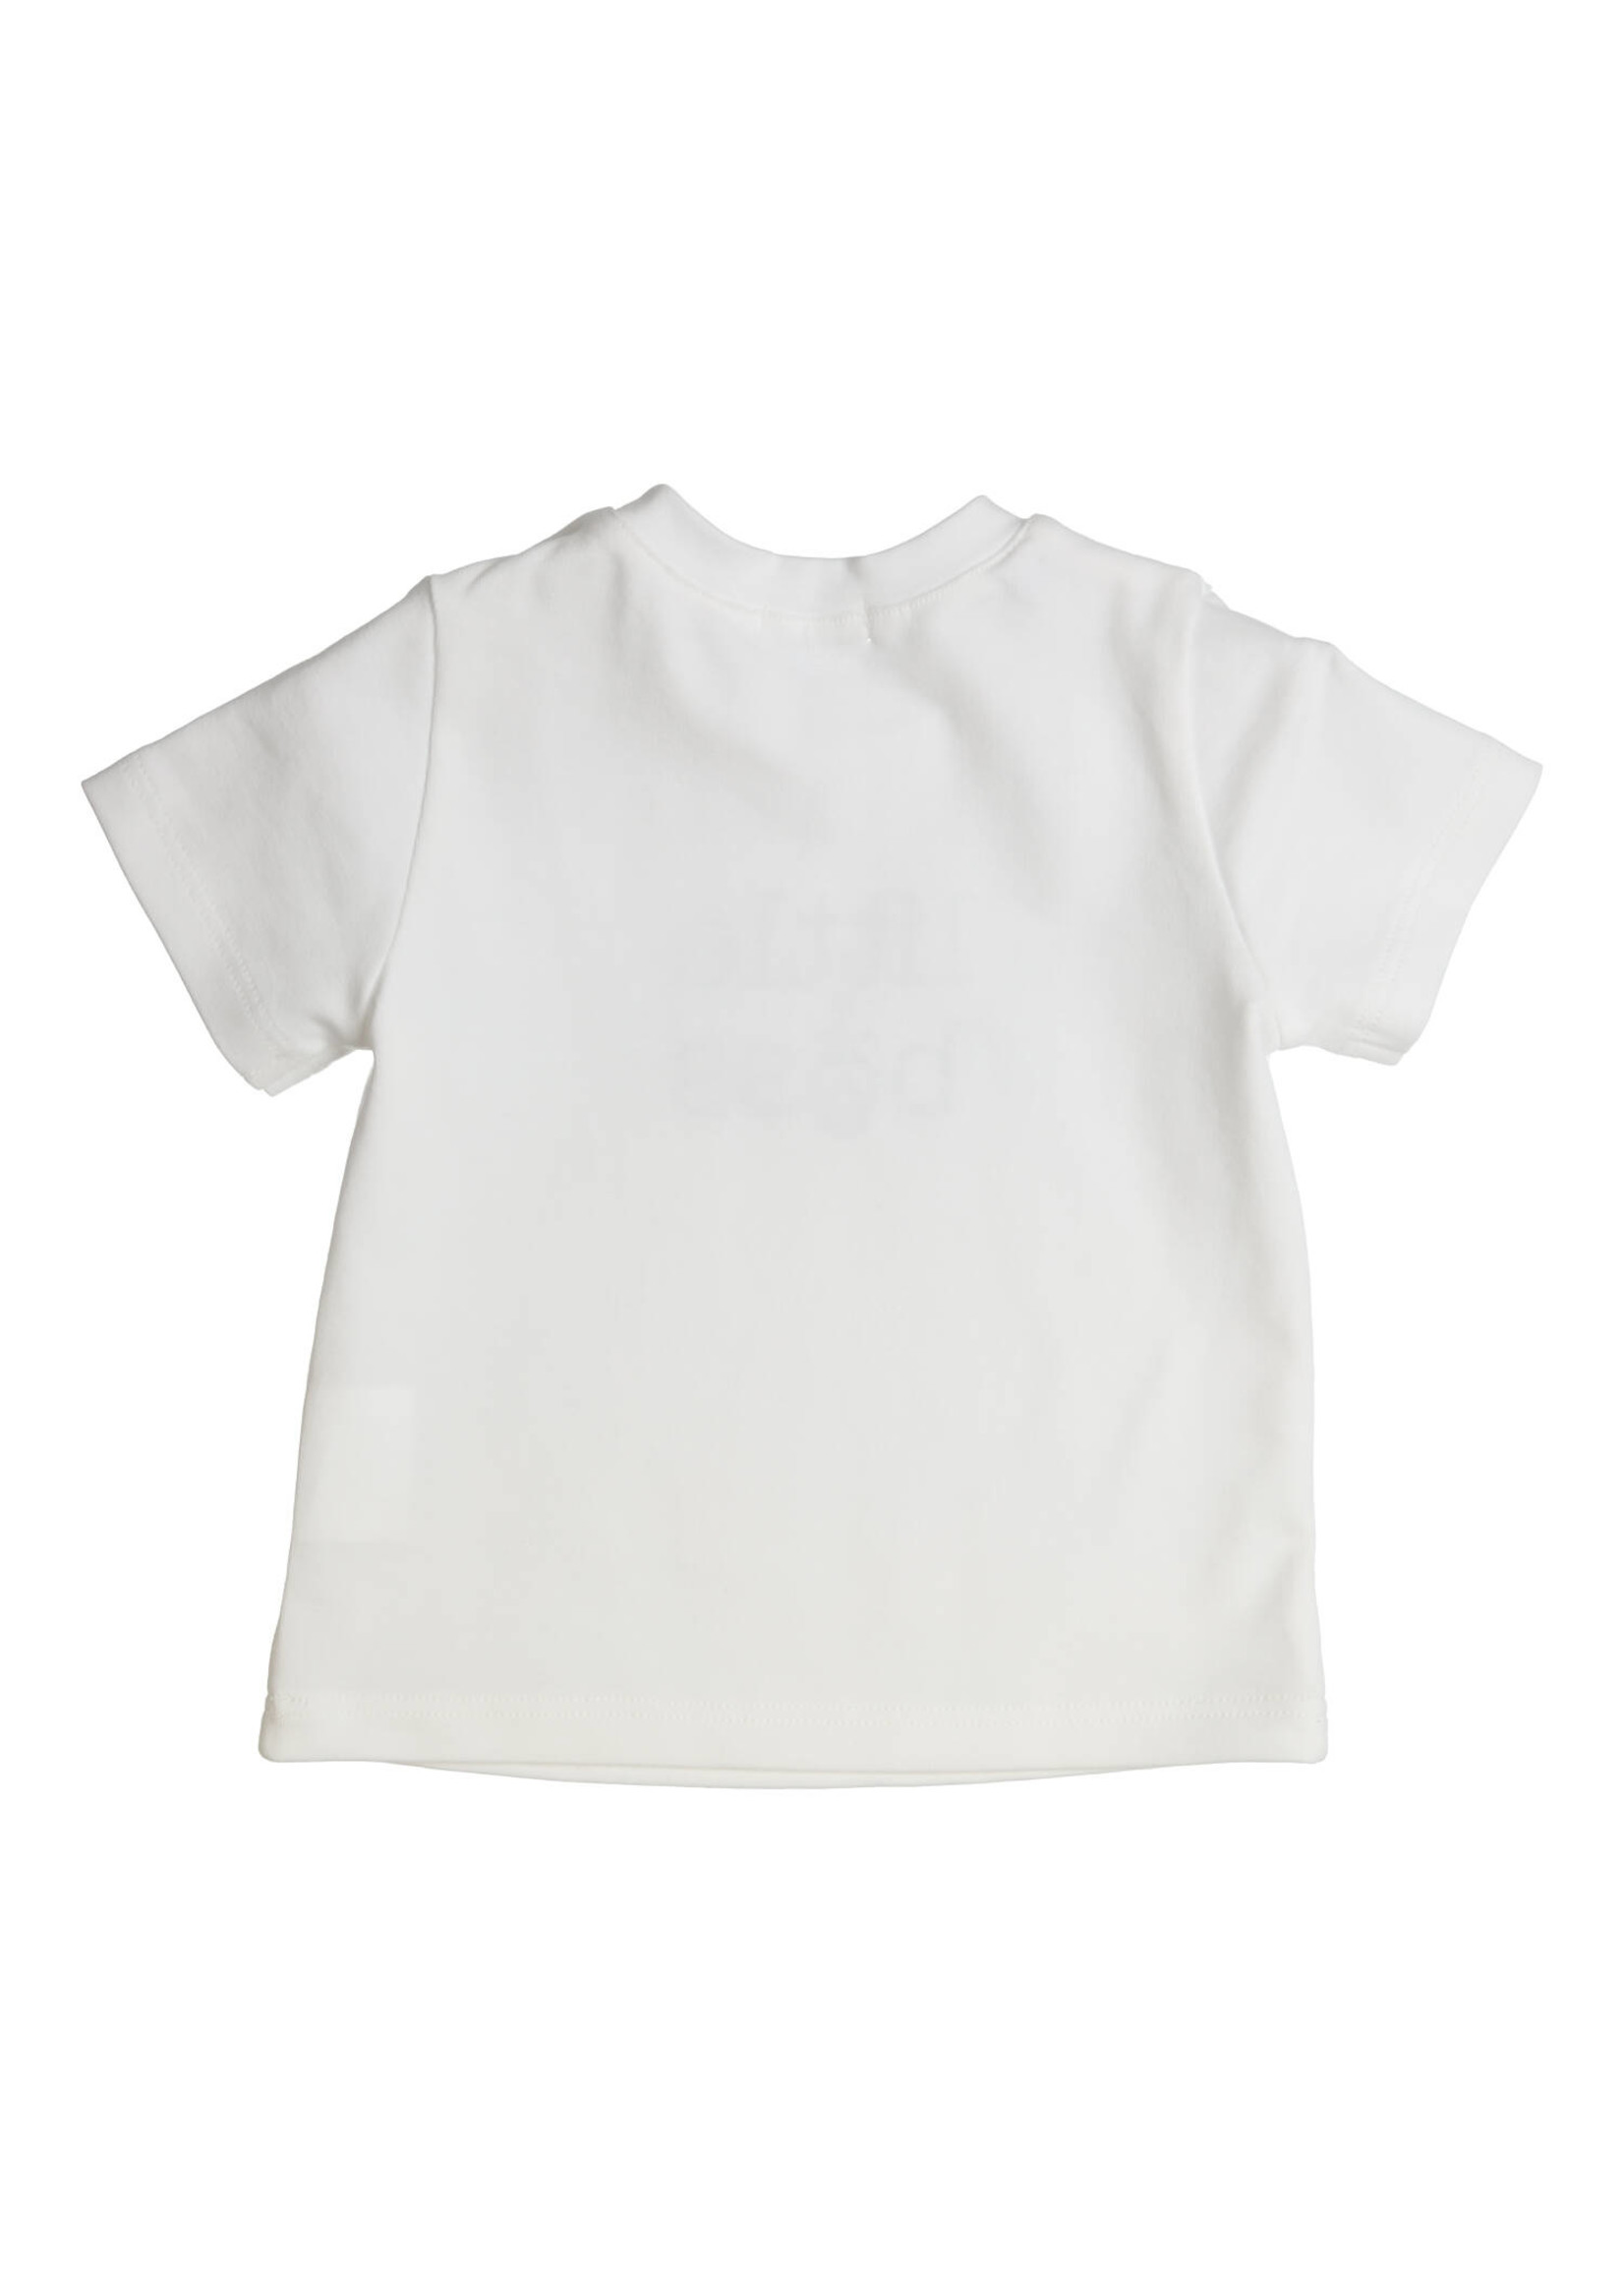 Gymp T-shirt Aerobic White - Blue 353-3205-20